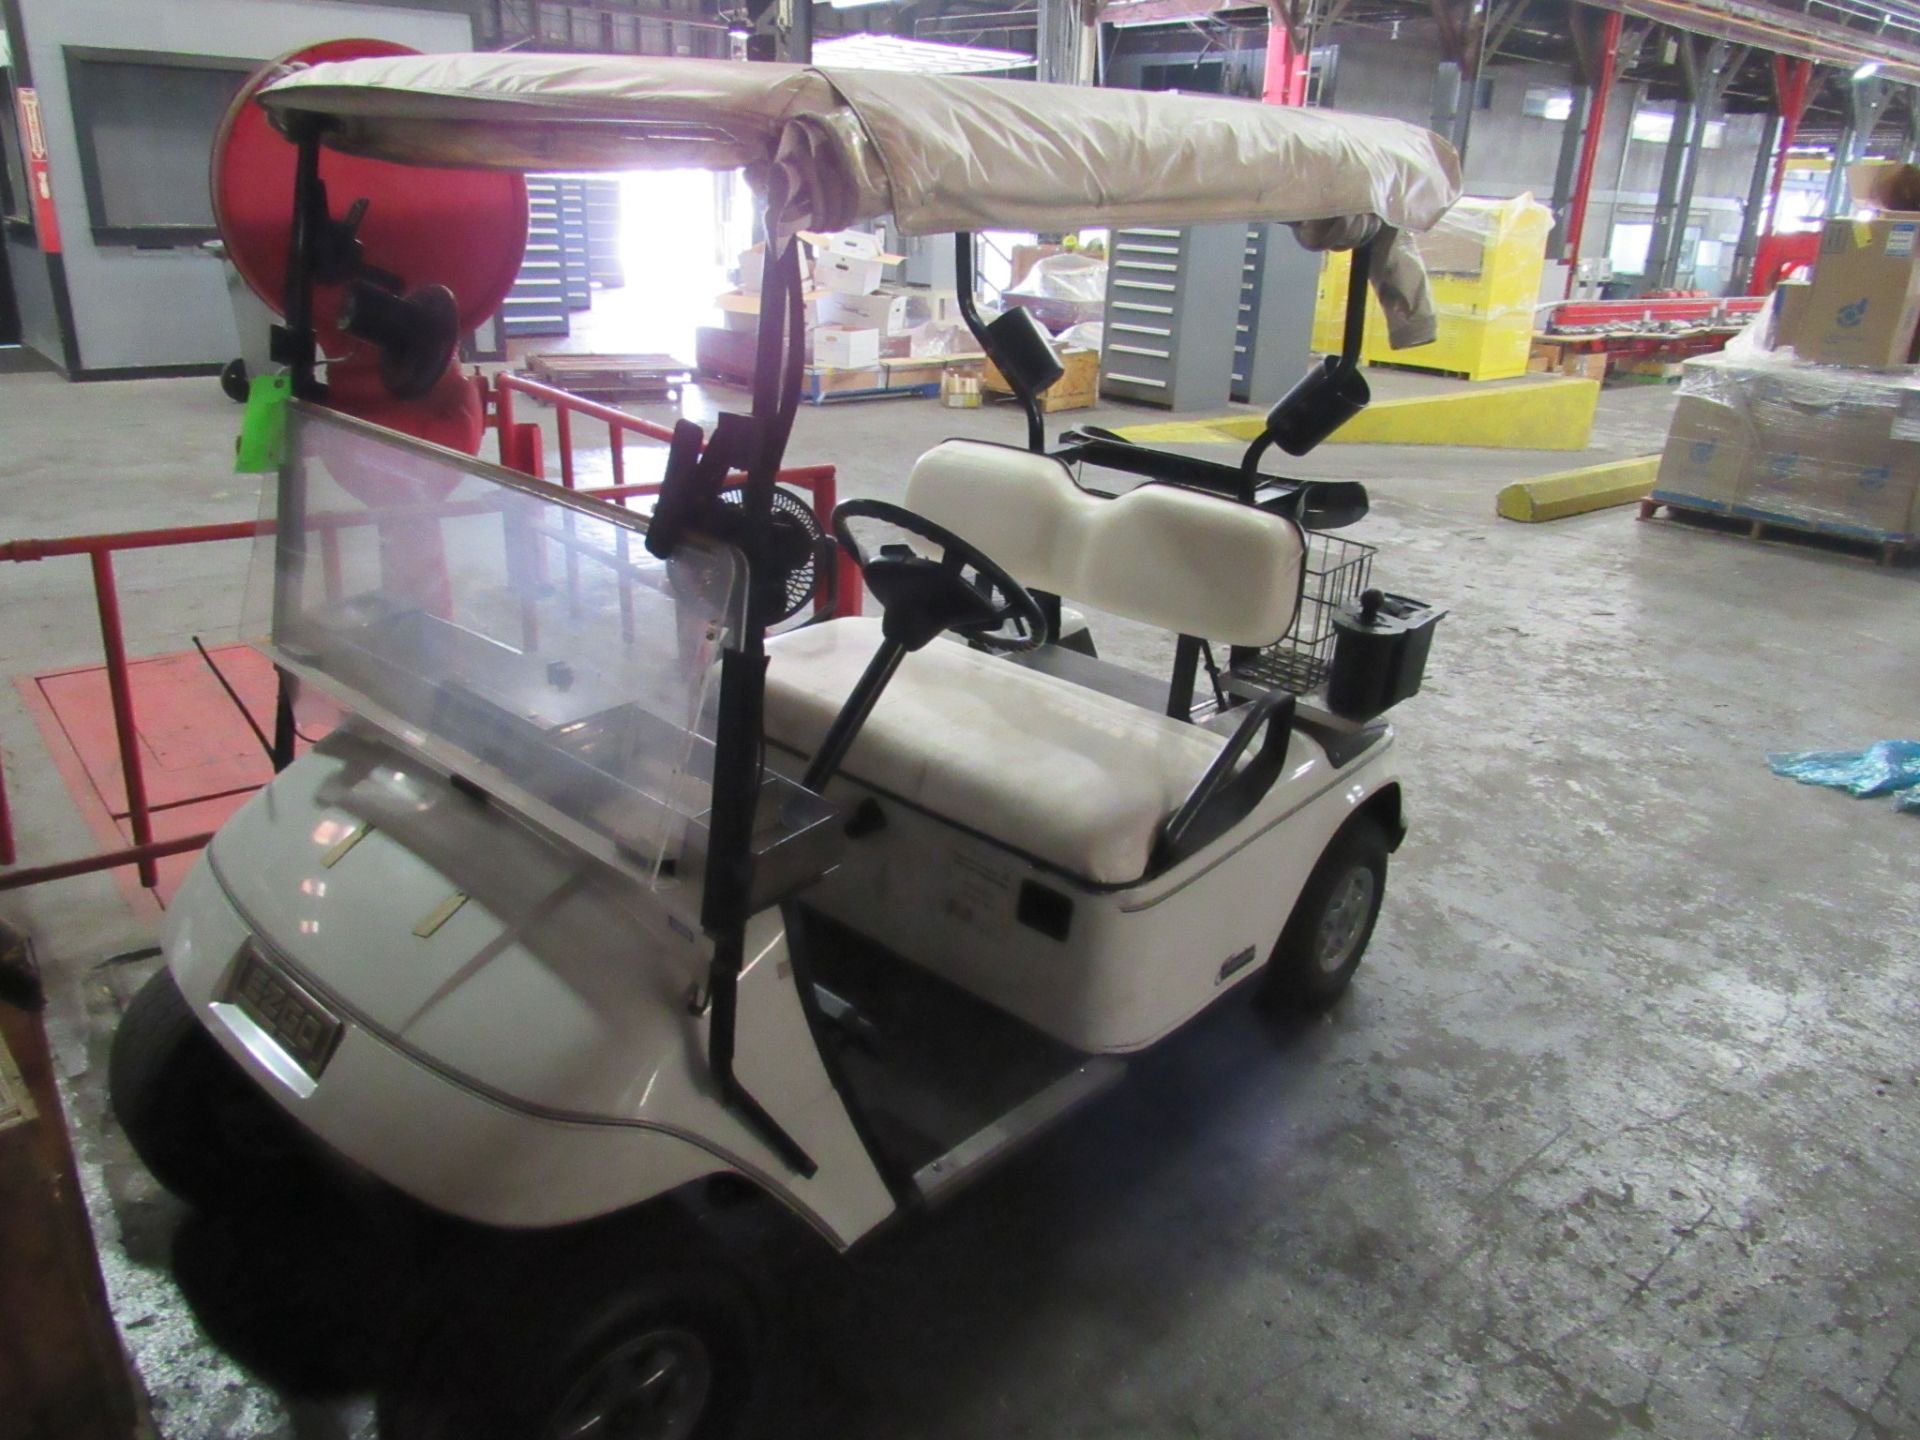 E-Z Go Textron Golf Cart Model L398, S/N 1135265